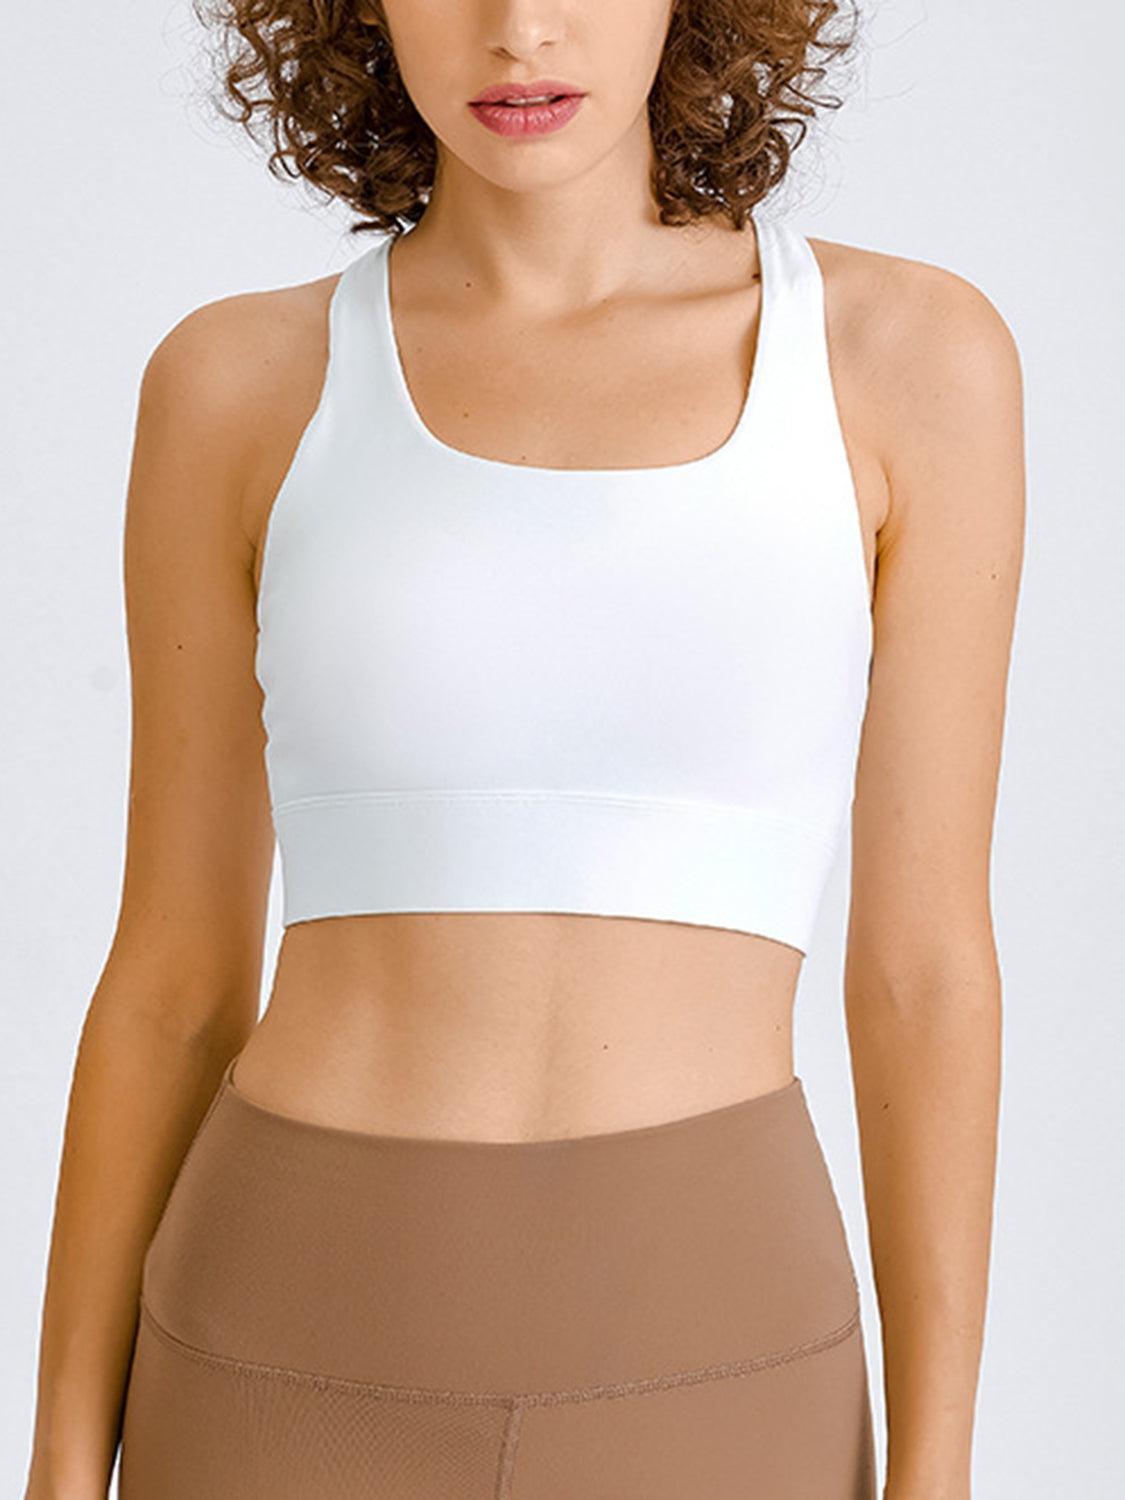 a woman in a white sports bra top